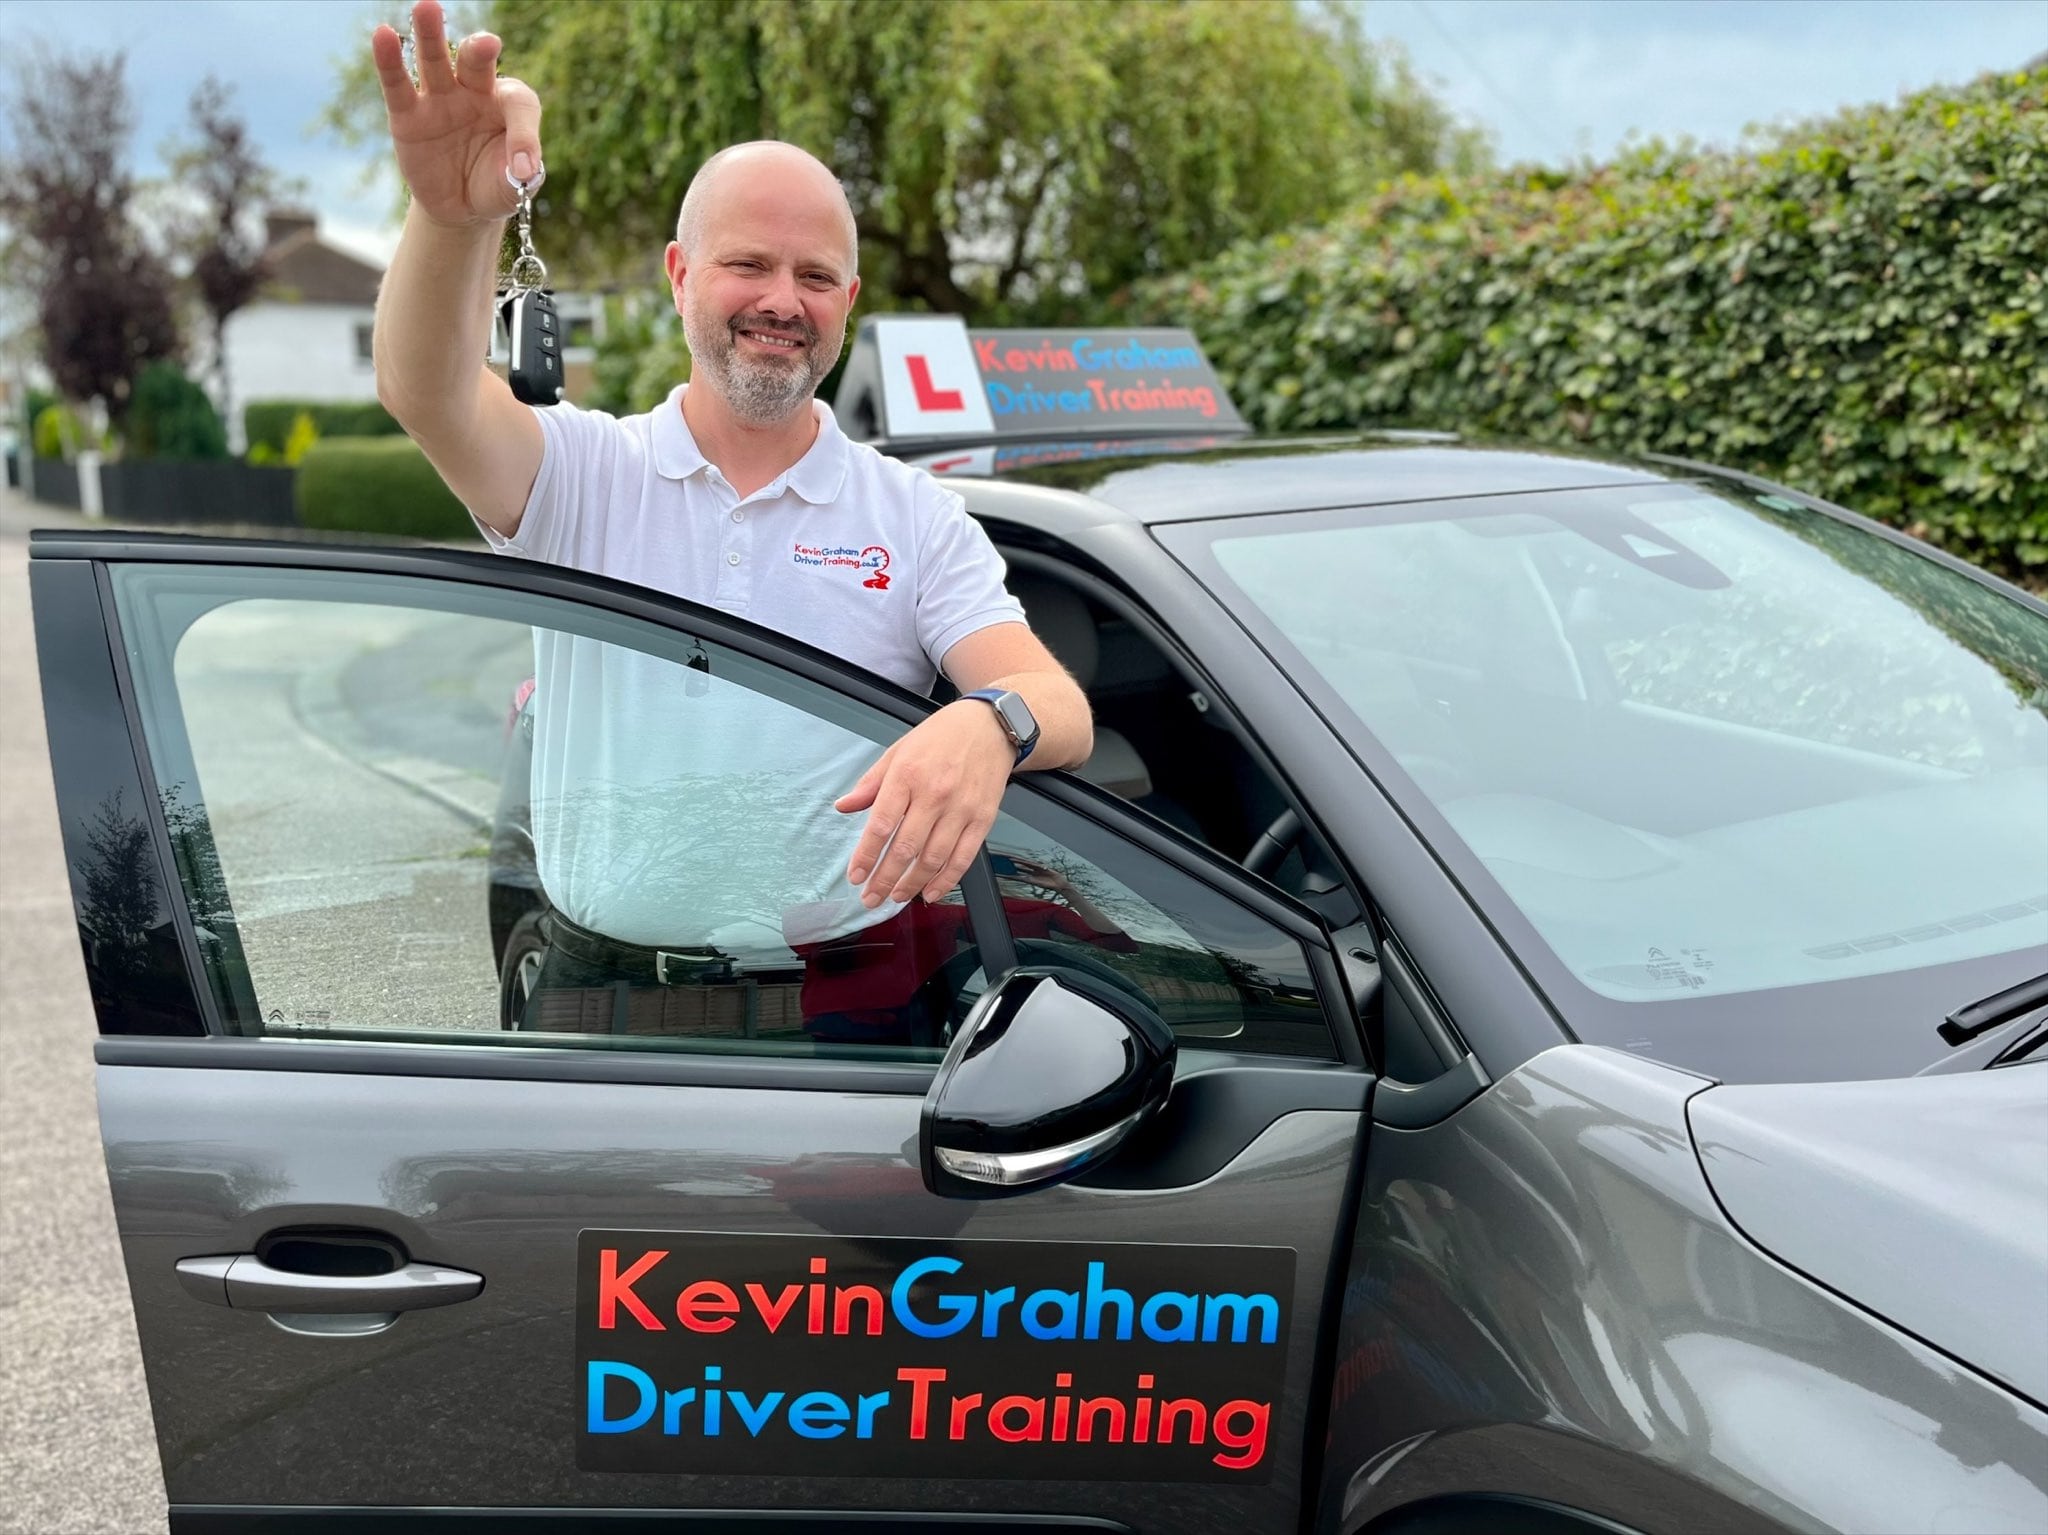 Kevin-Graham-Driver-Training-min